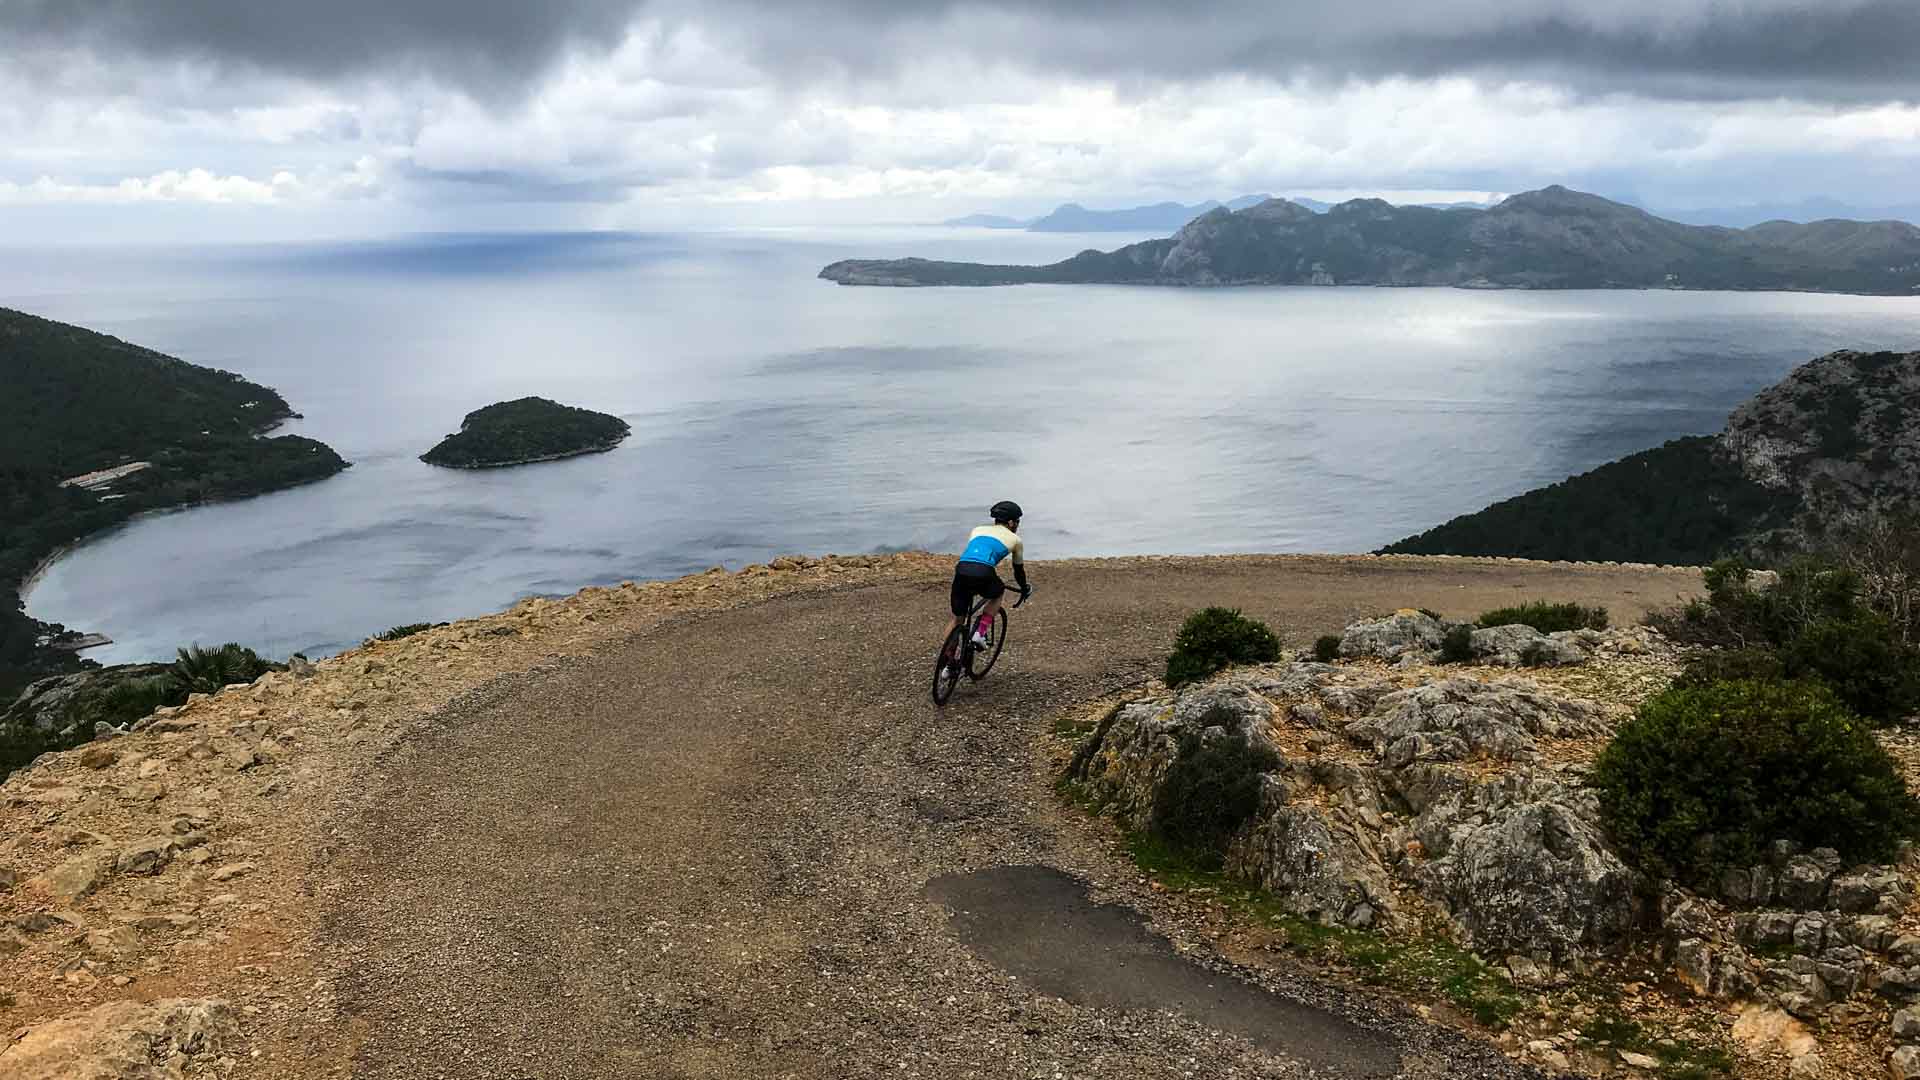 Cap de Formentor cycling climb views from the Pepperpot cycling climb